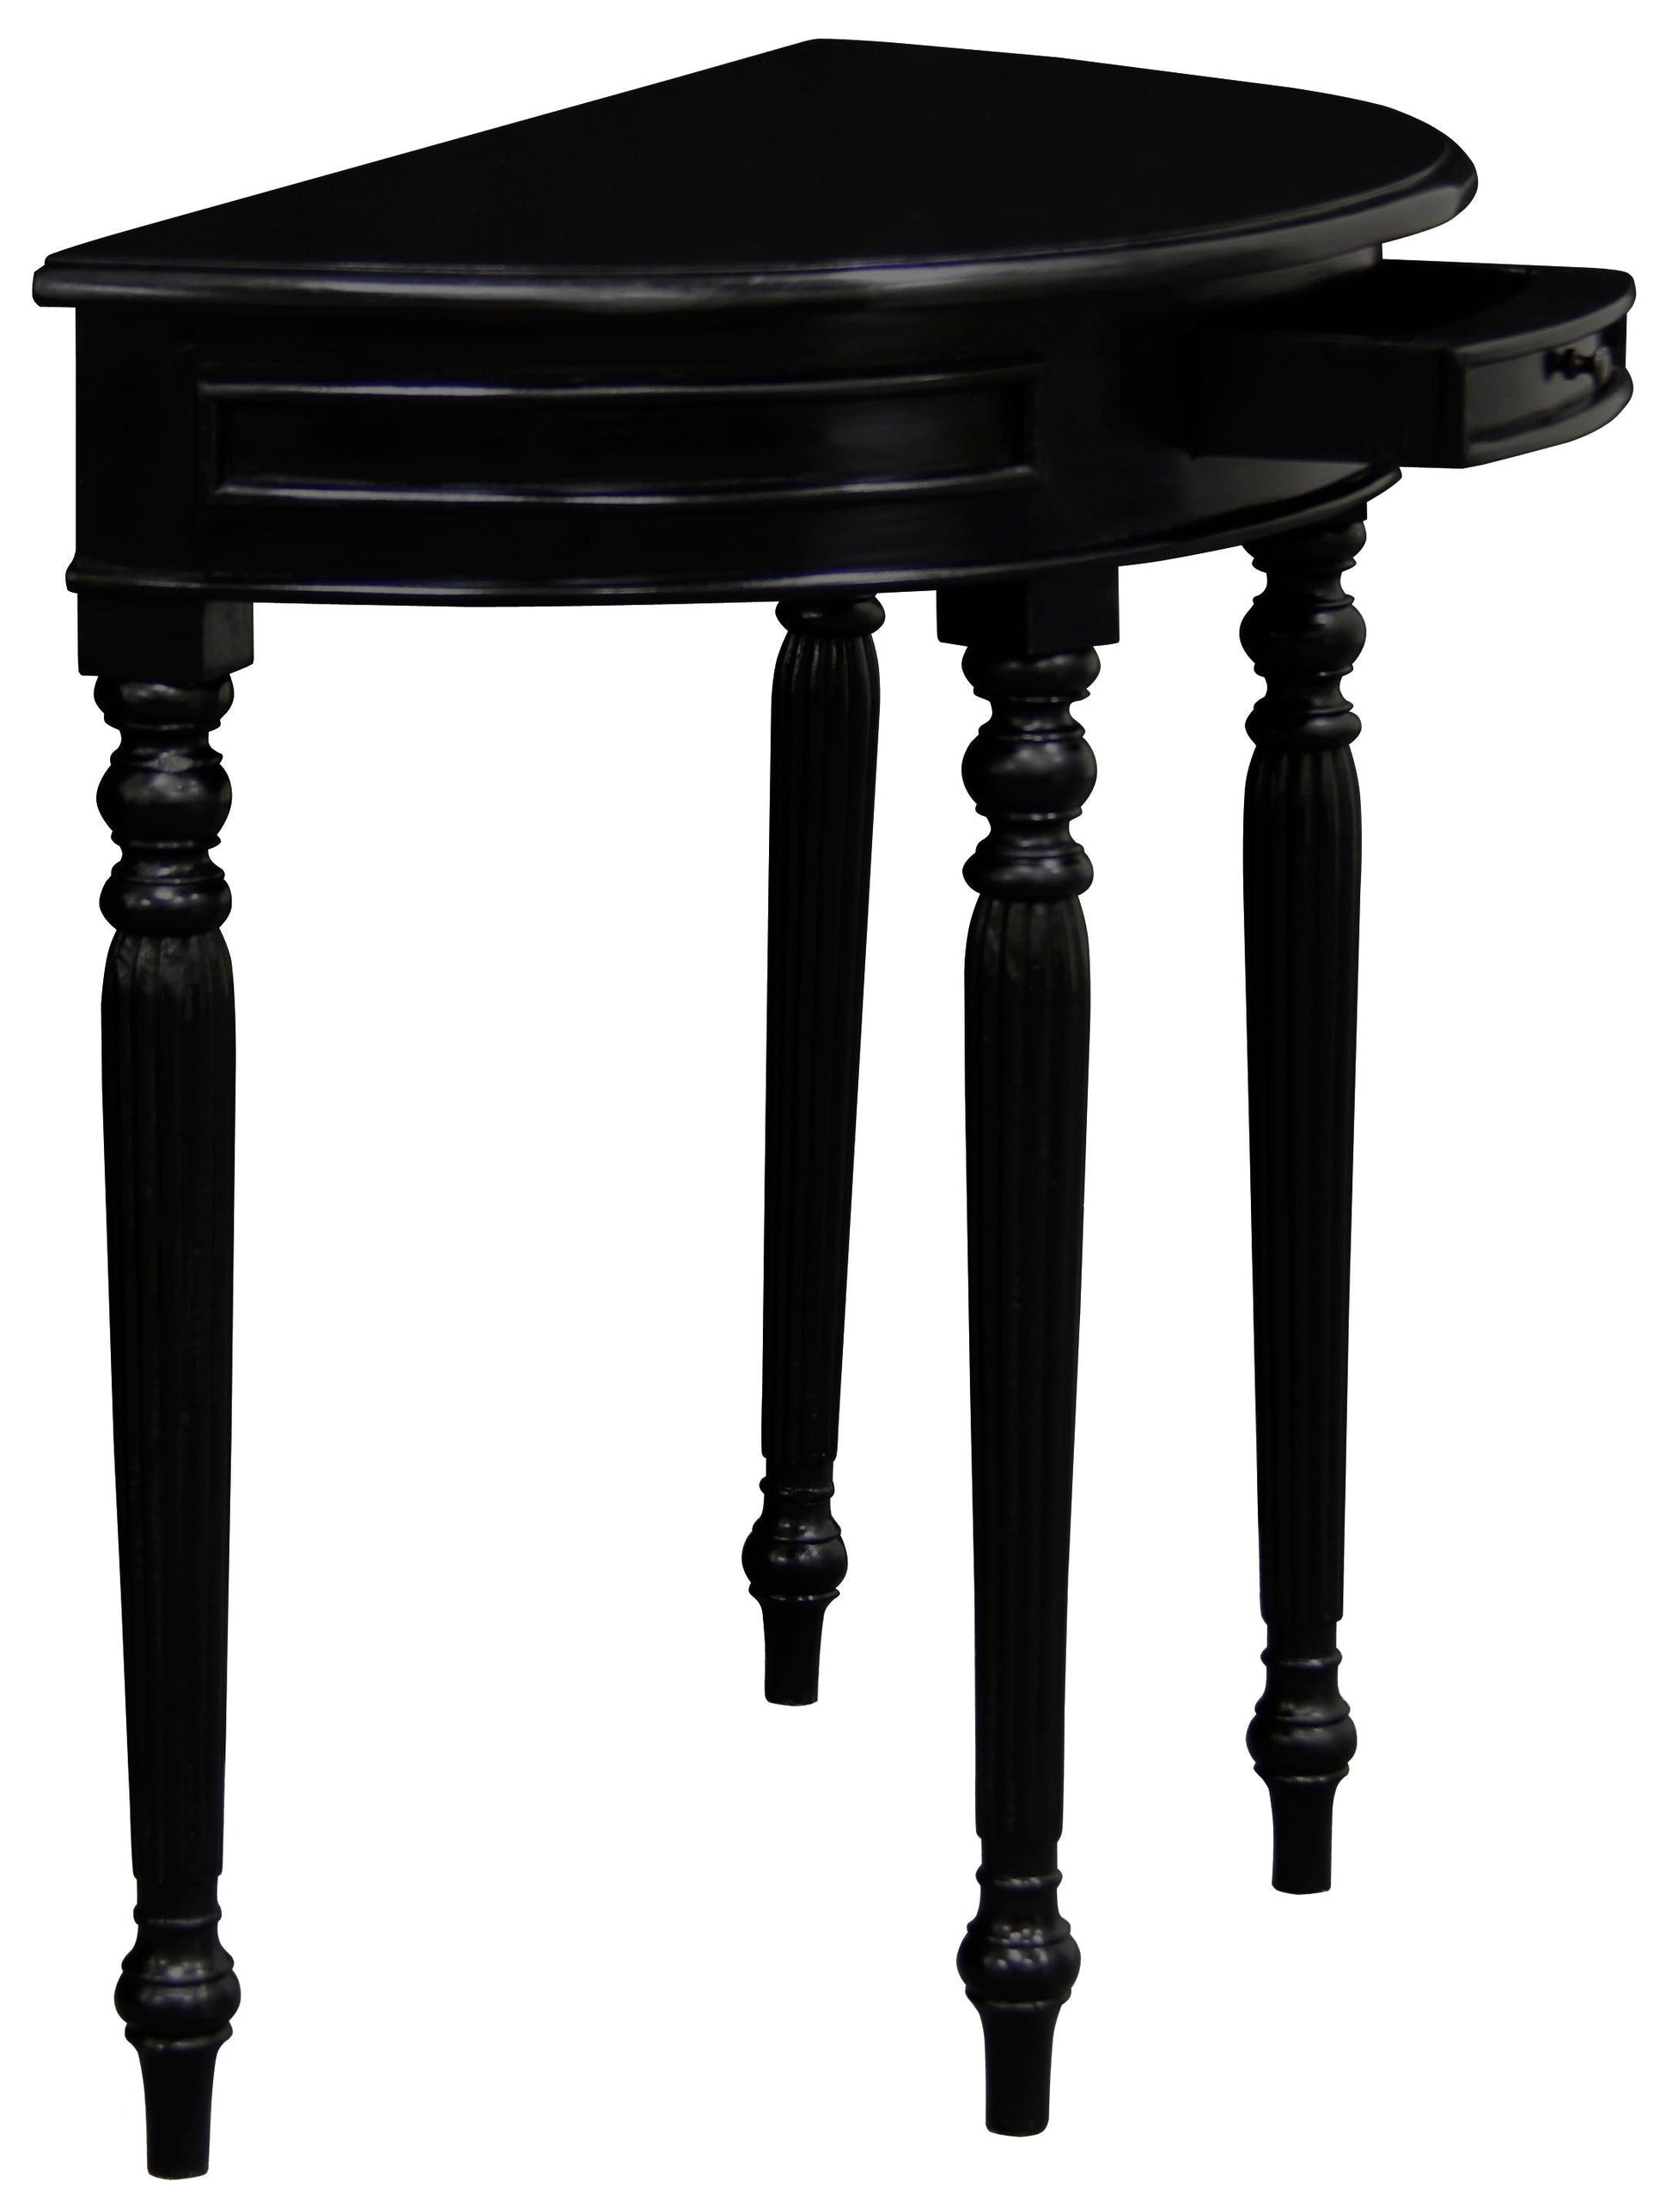 Huntley Turn Leg Half Round Sofa Table (Black) - TableT 28 (B)754169490942 1